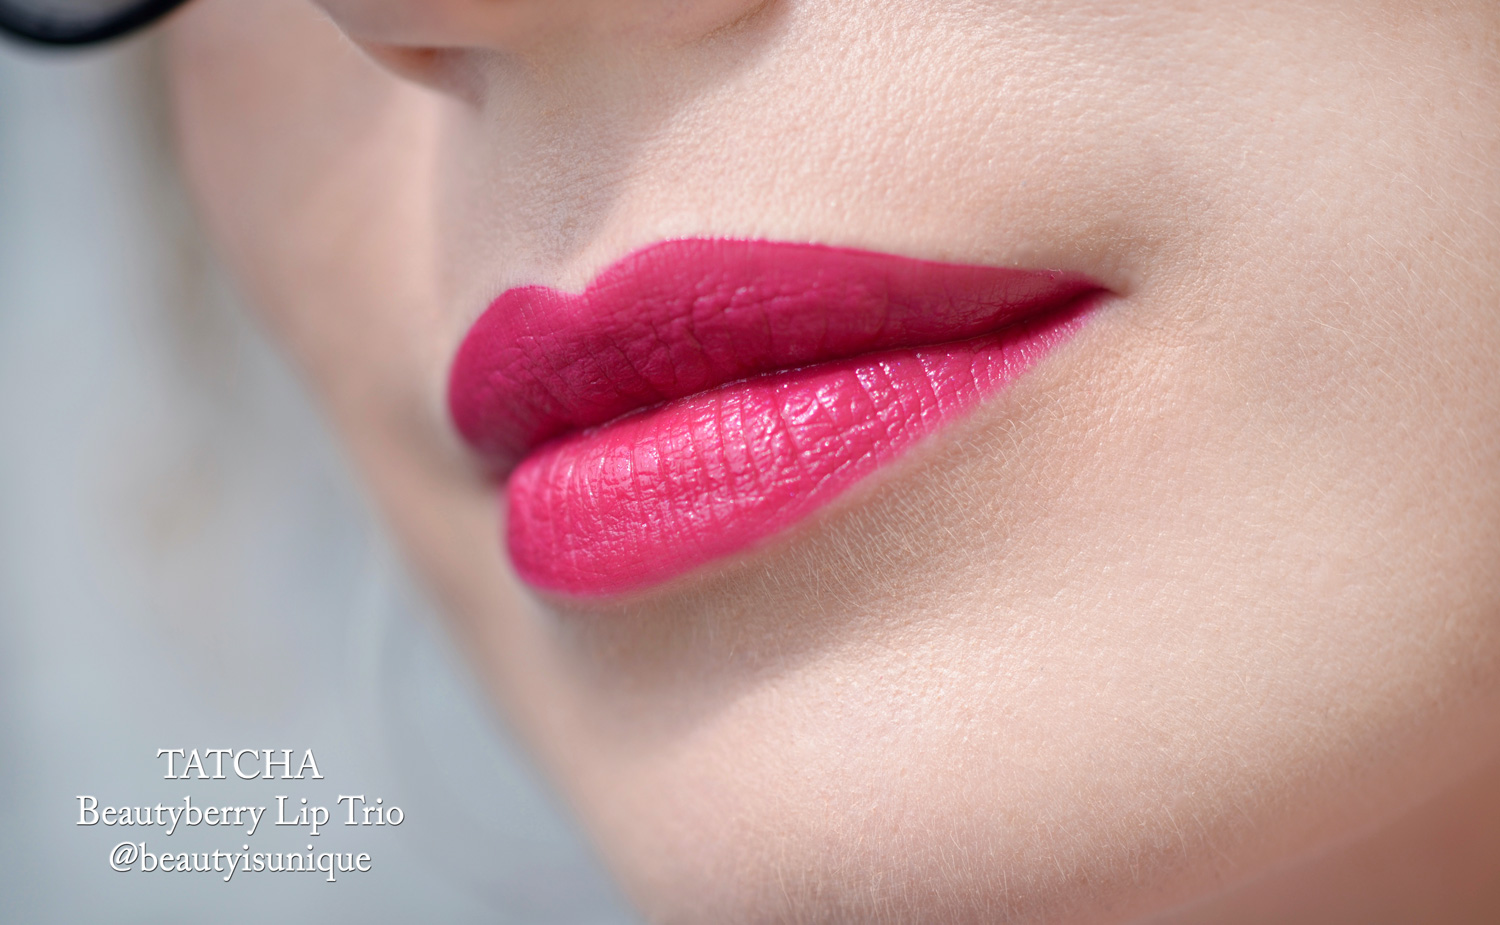 Tatcha-beautyberry-silk-lipstick-swatches